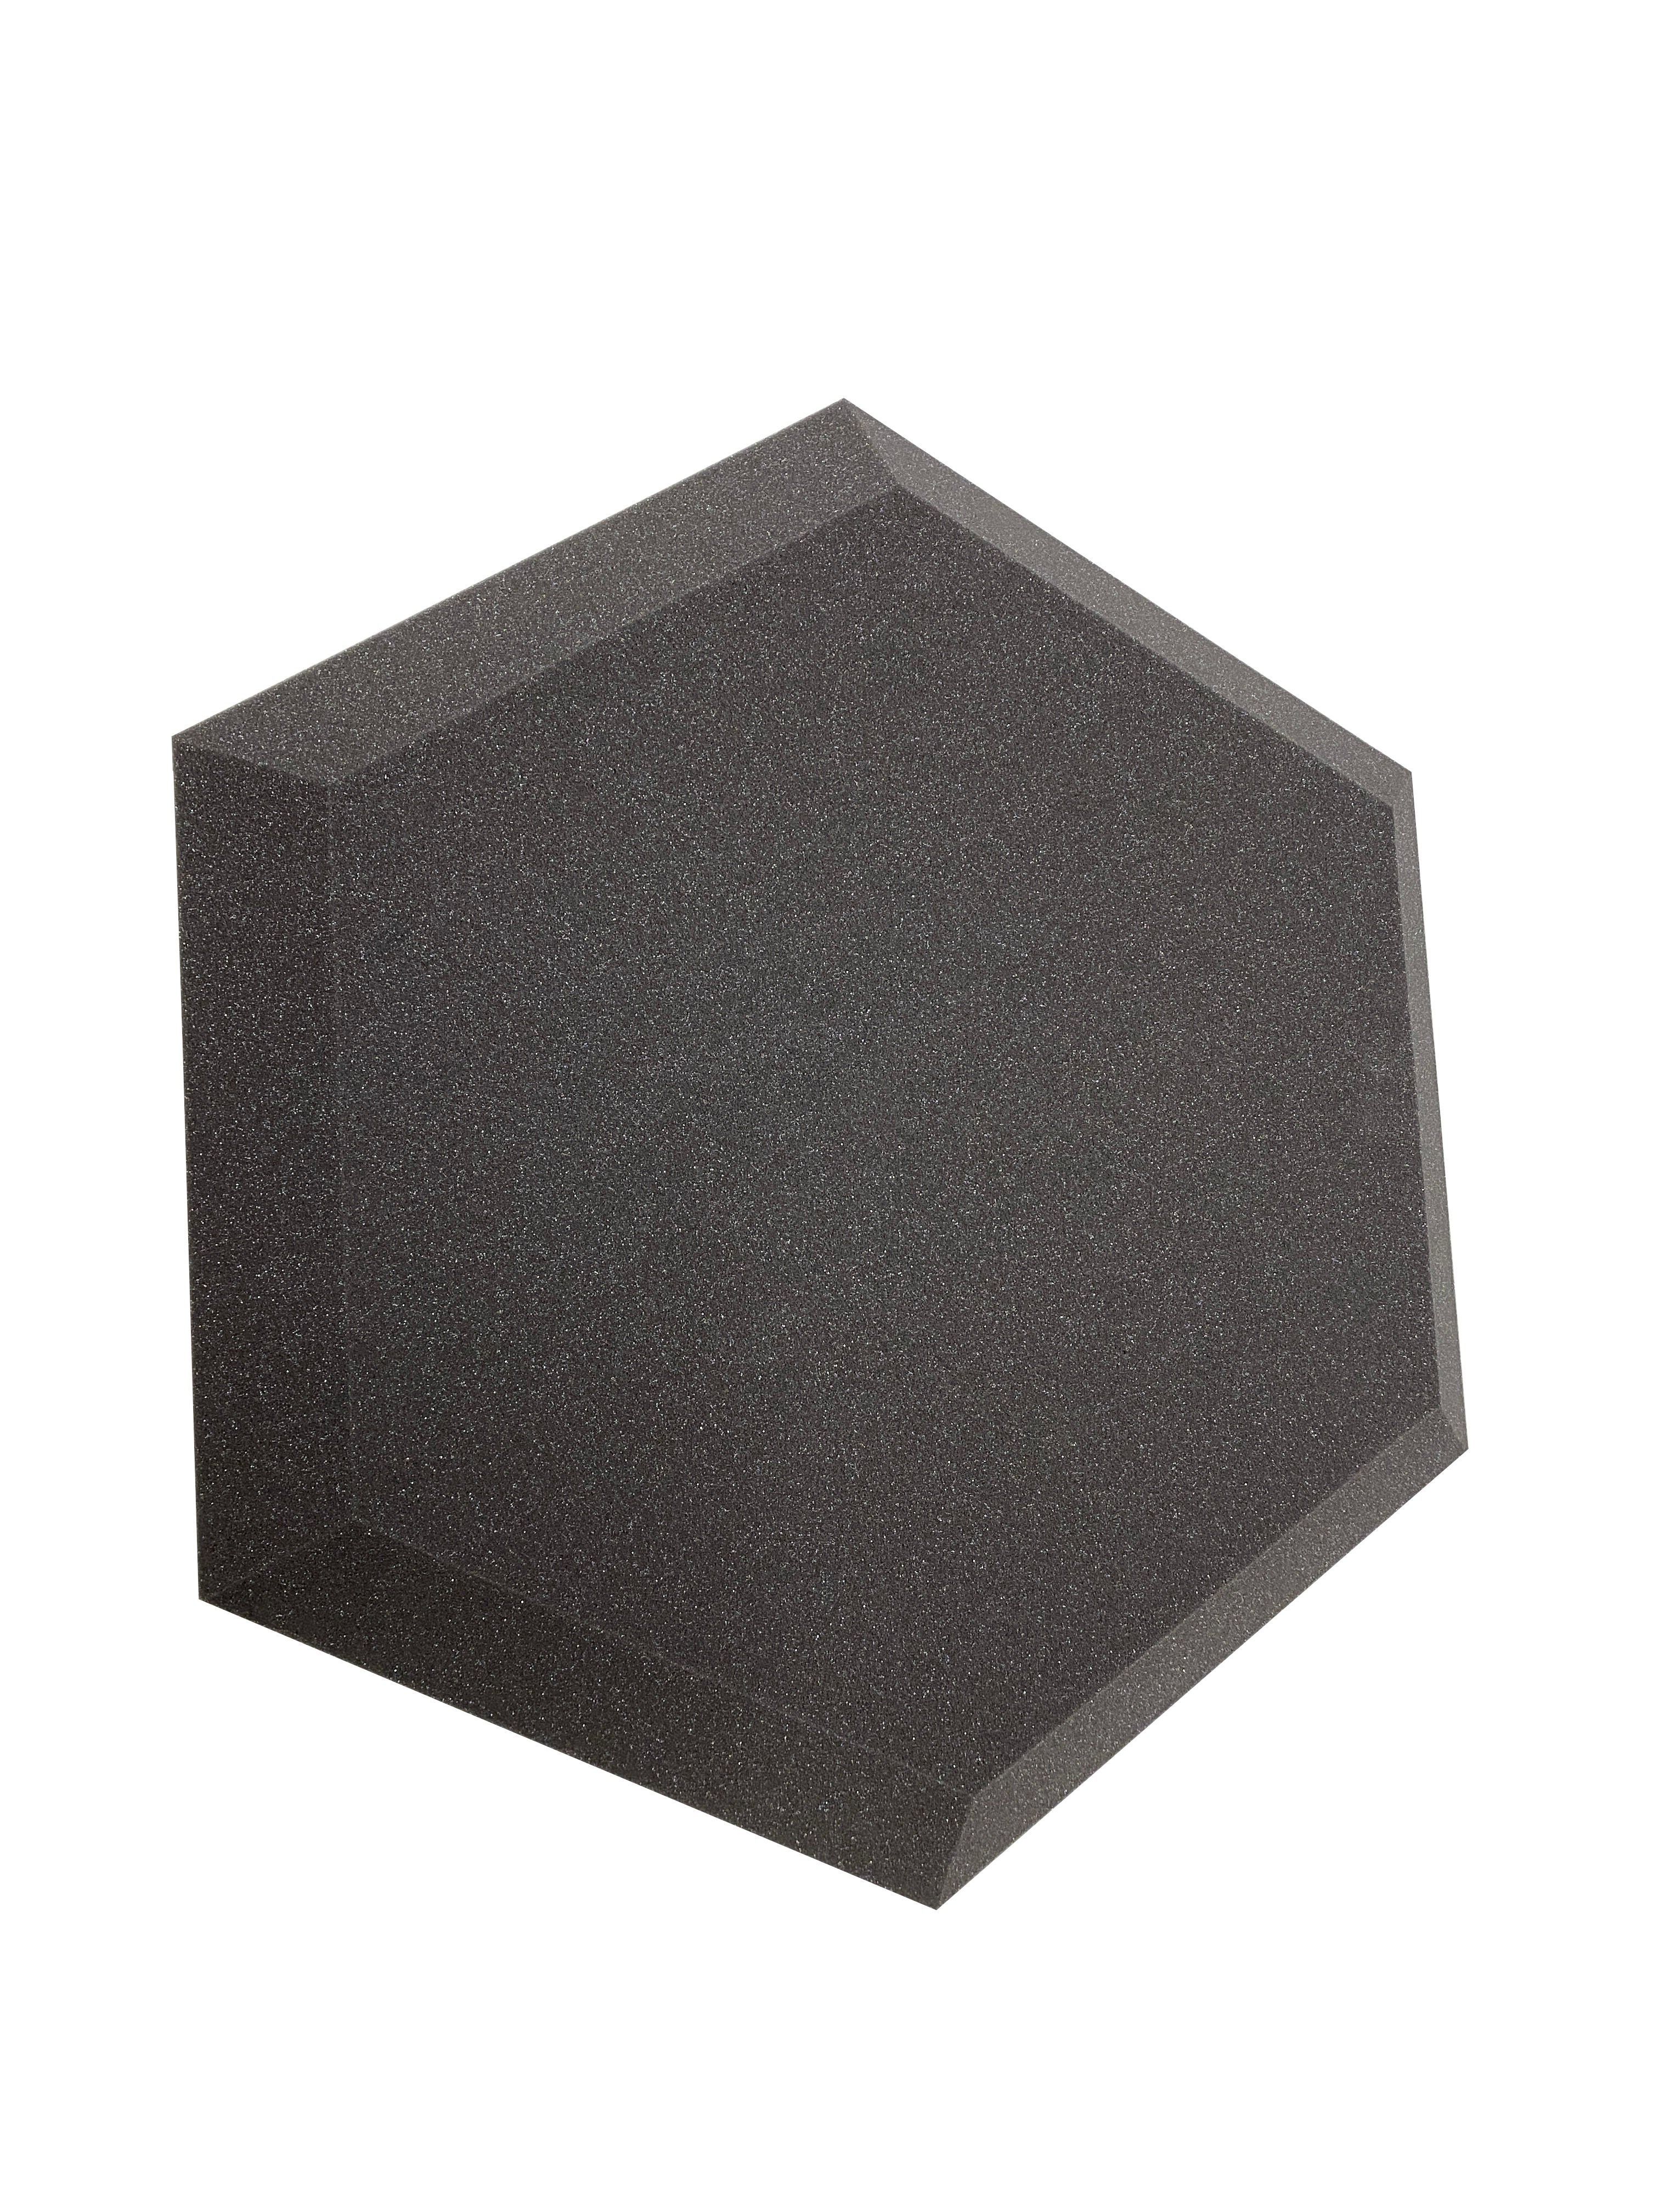 Kaufen mittelgrau Hexatile3 Acoustic Studio Foam Tile Pack – 12 Fliesen, 2,88 m² Abdeckung